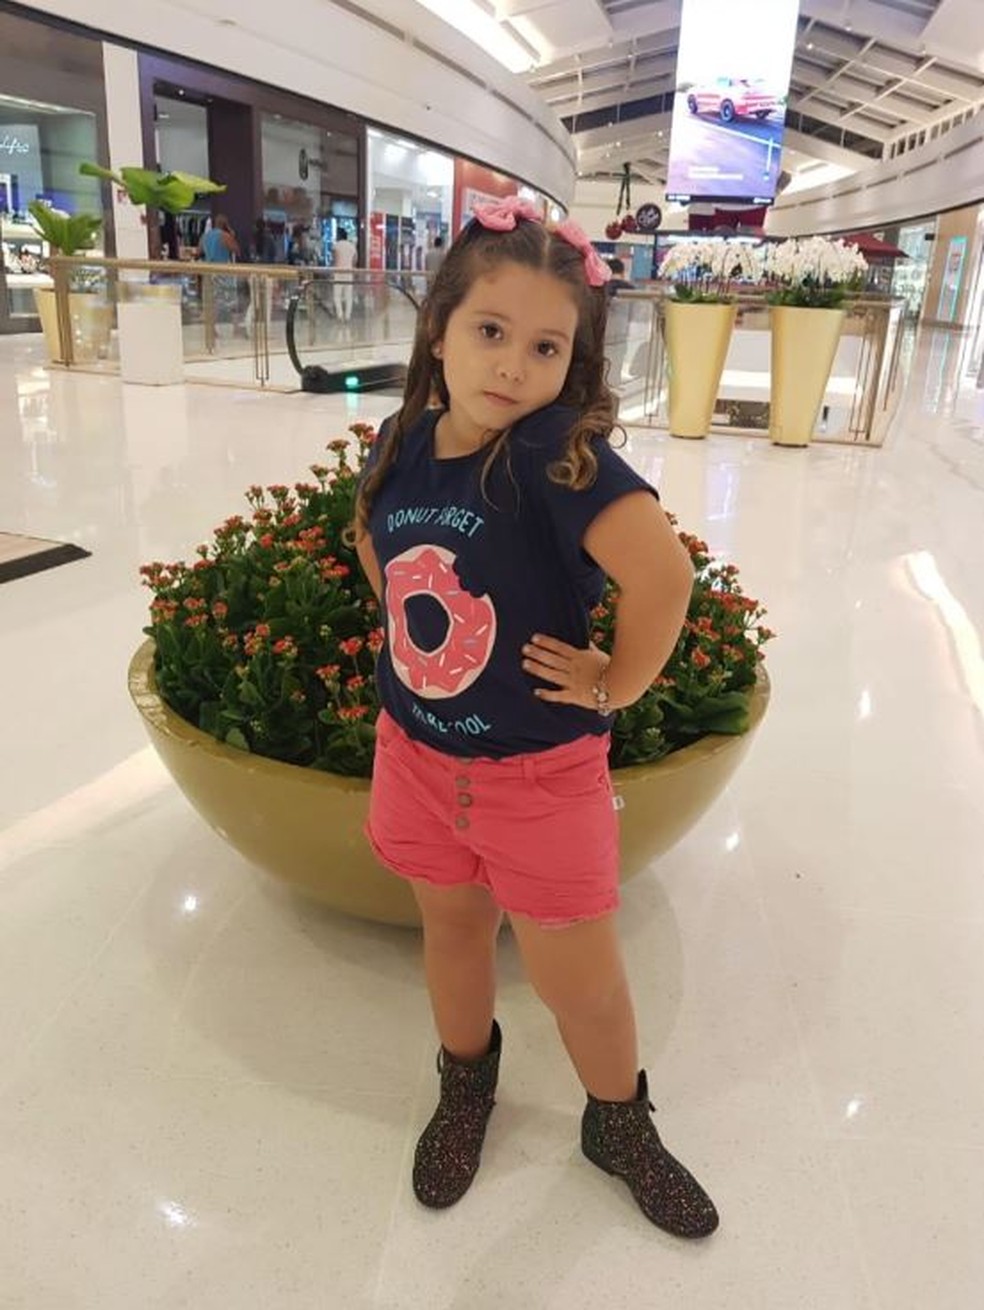 Florida coronavirus: Family mourns 9-year-old girl, urges caution